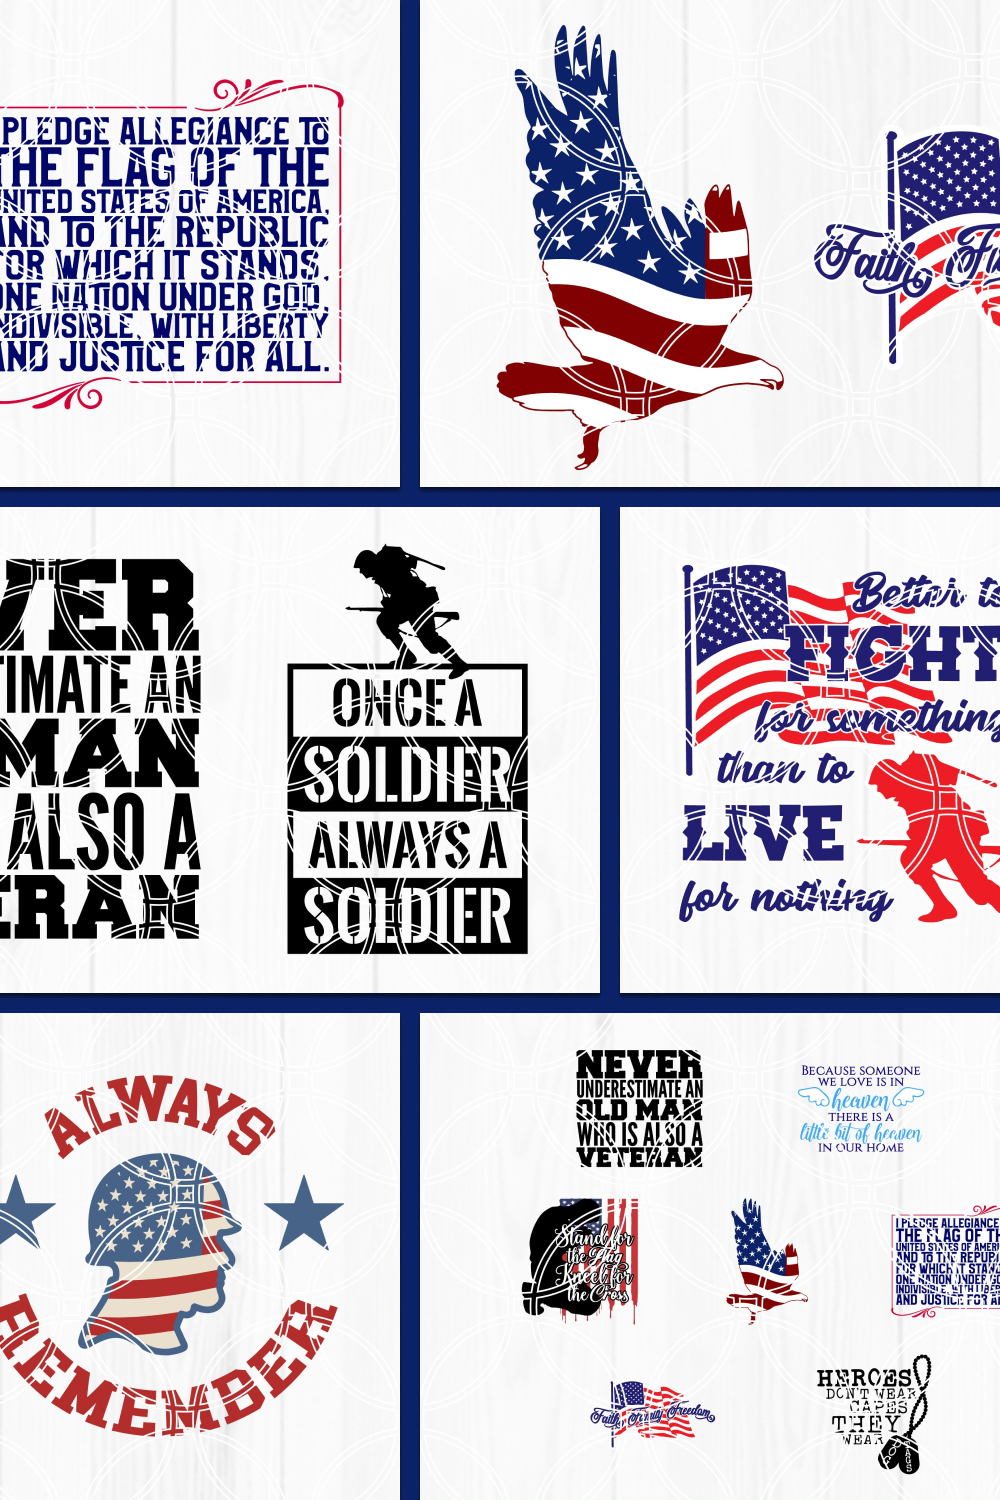 Images of patriotic prints.